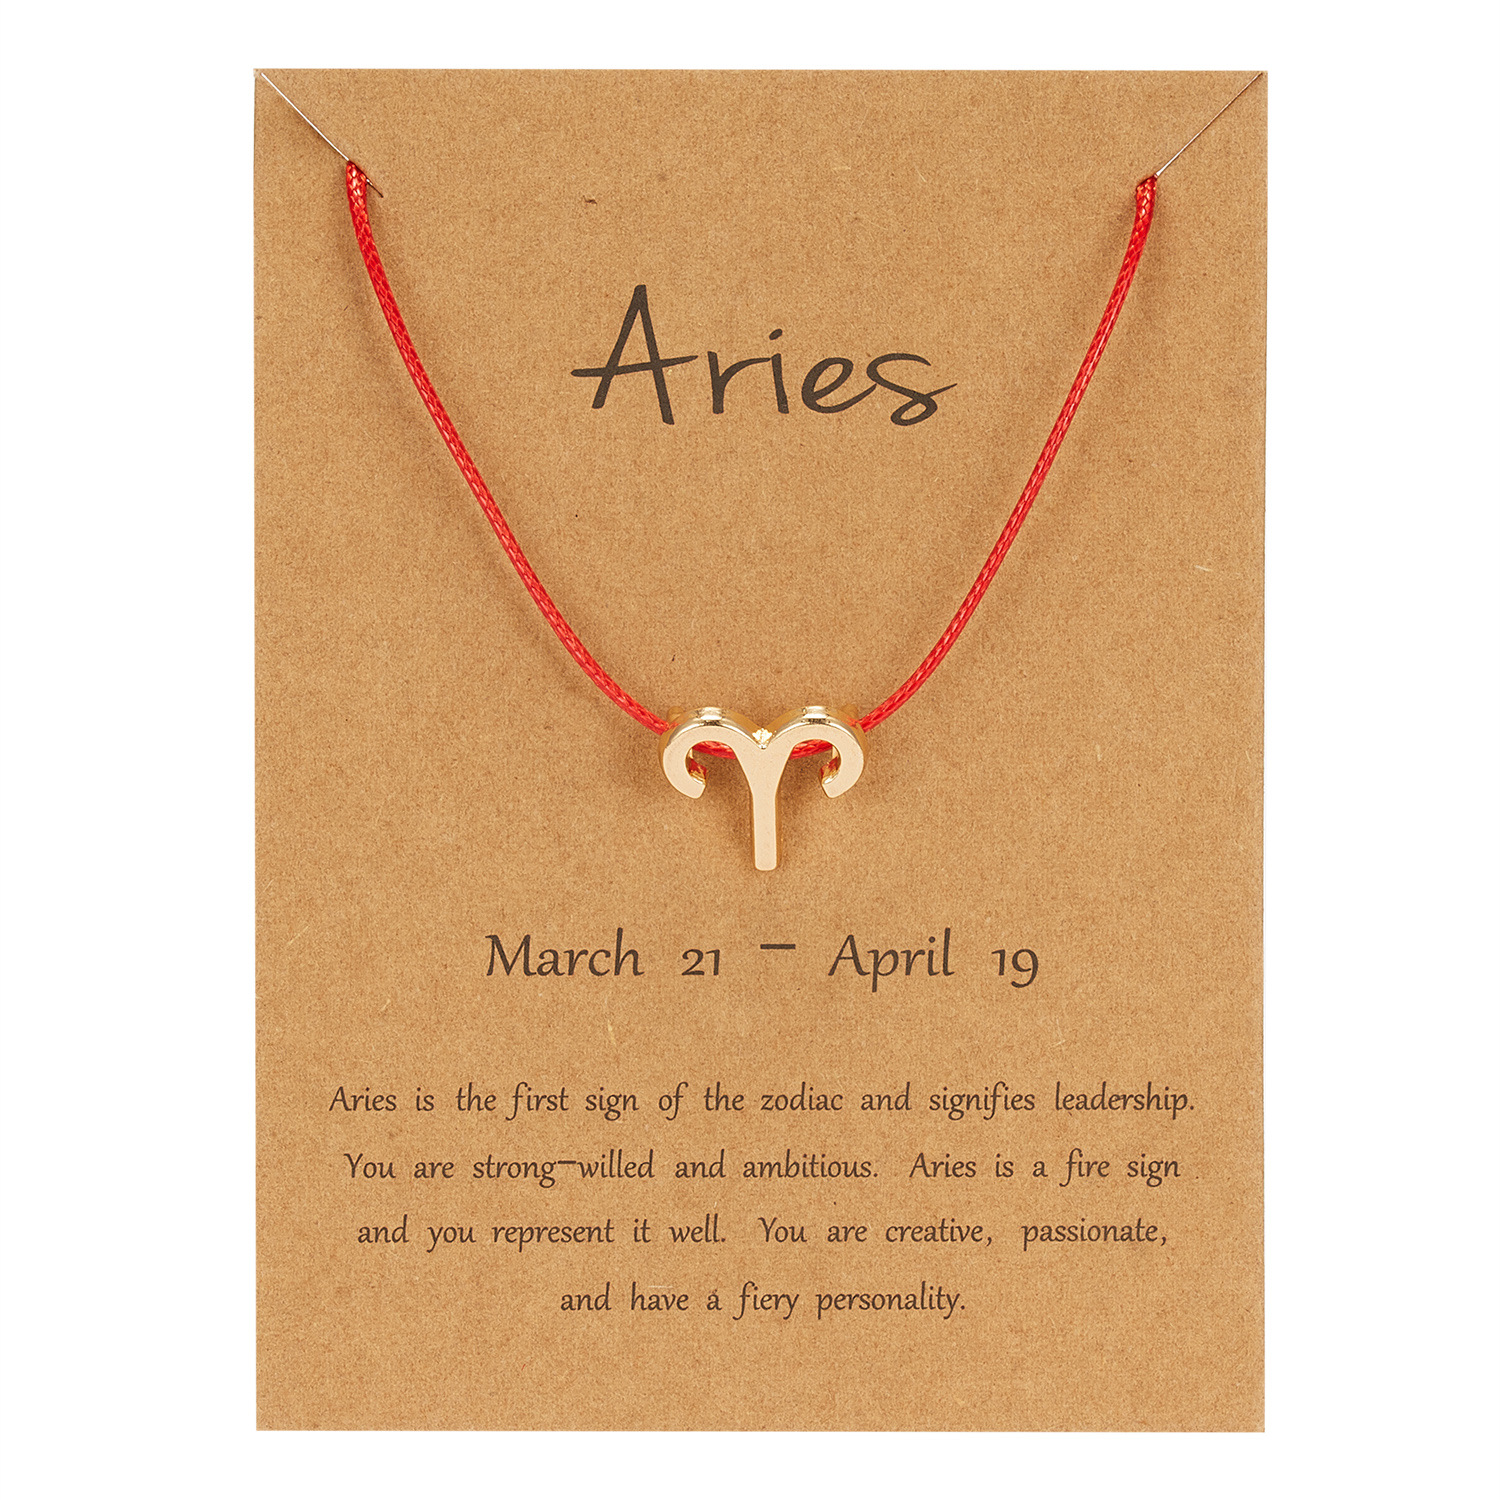 Aries (Red Rope)